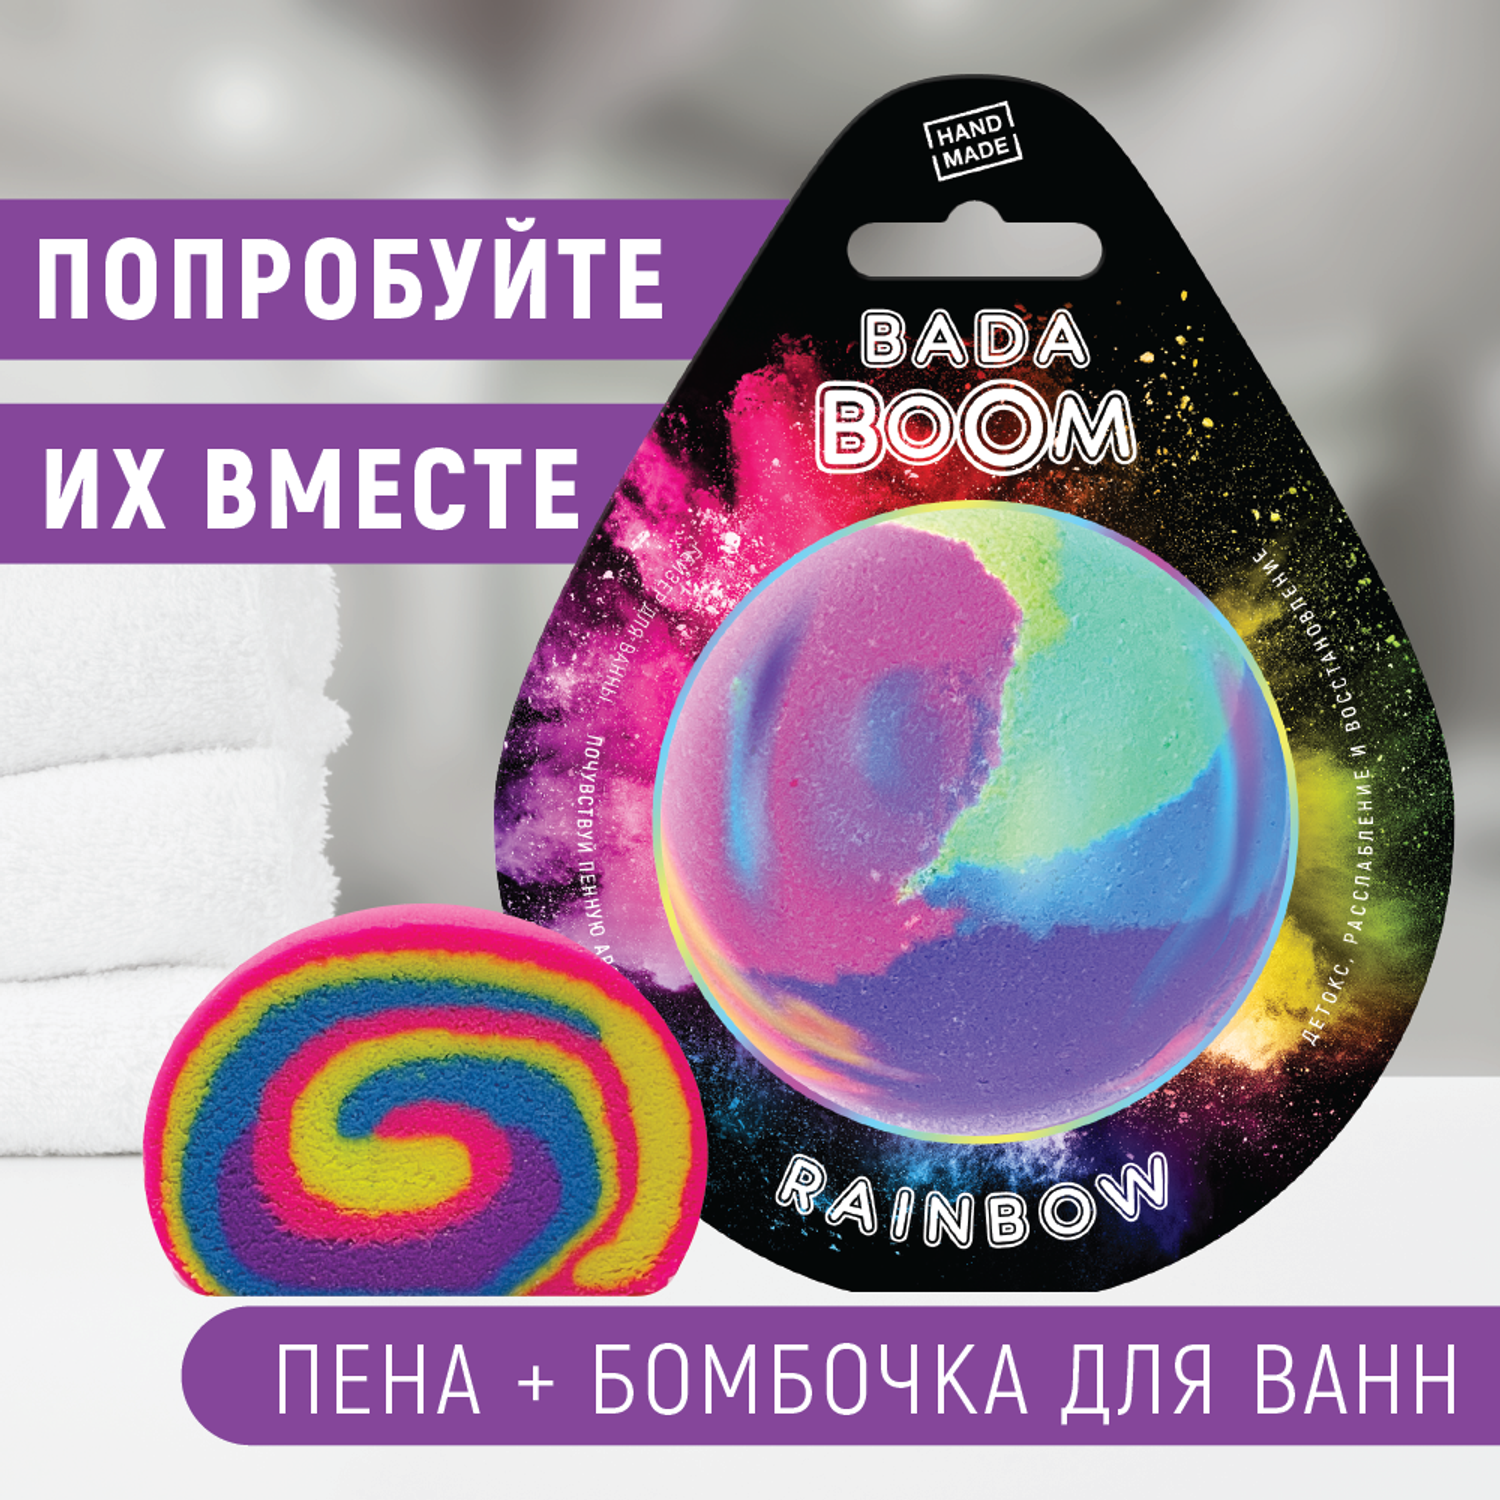 Твердая пена для ванны BADA BOOM Rainbow - Арбуз / Манго - фото 3